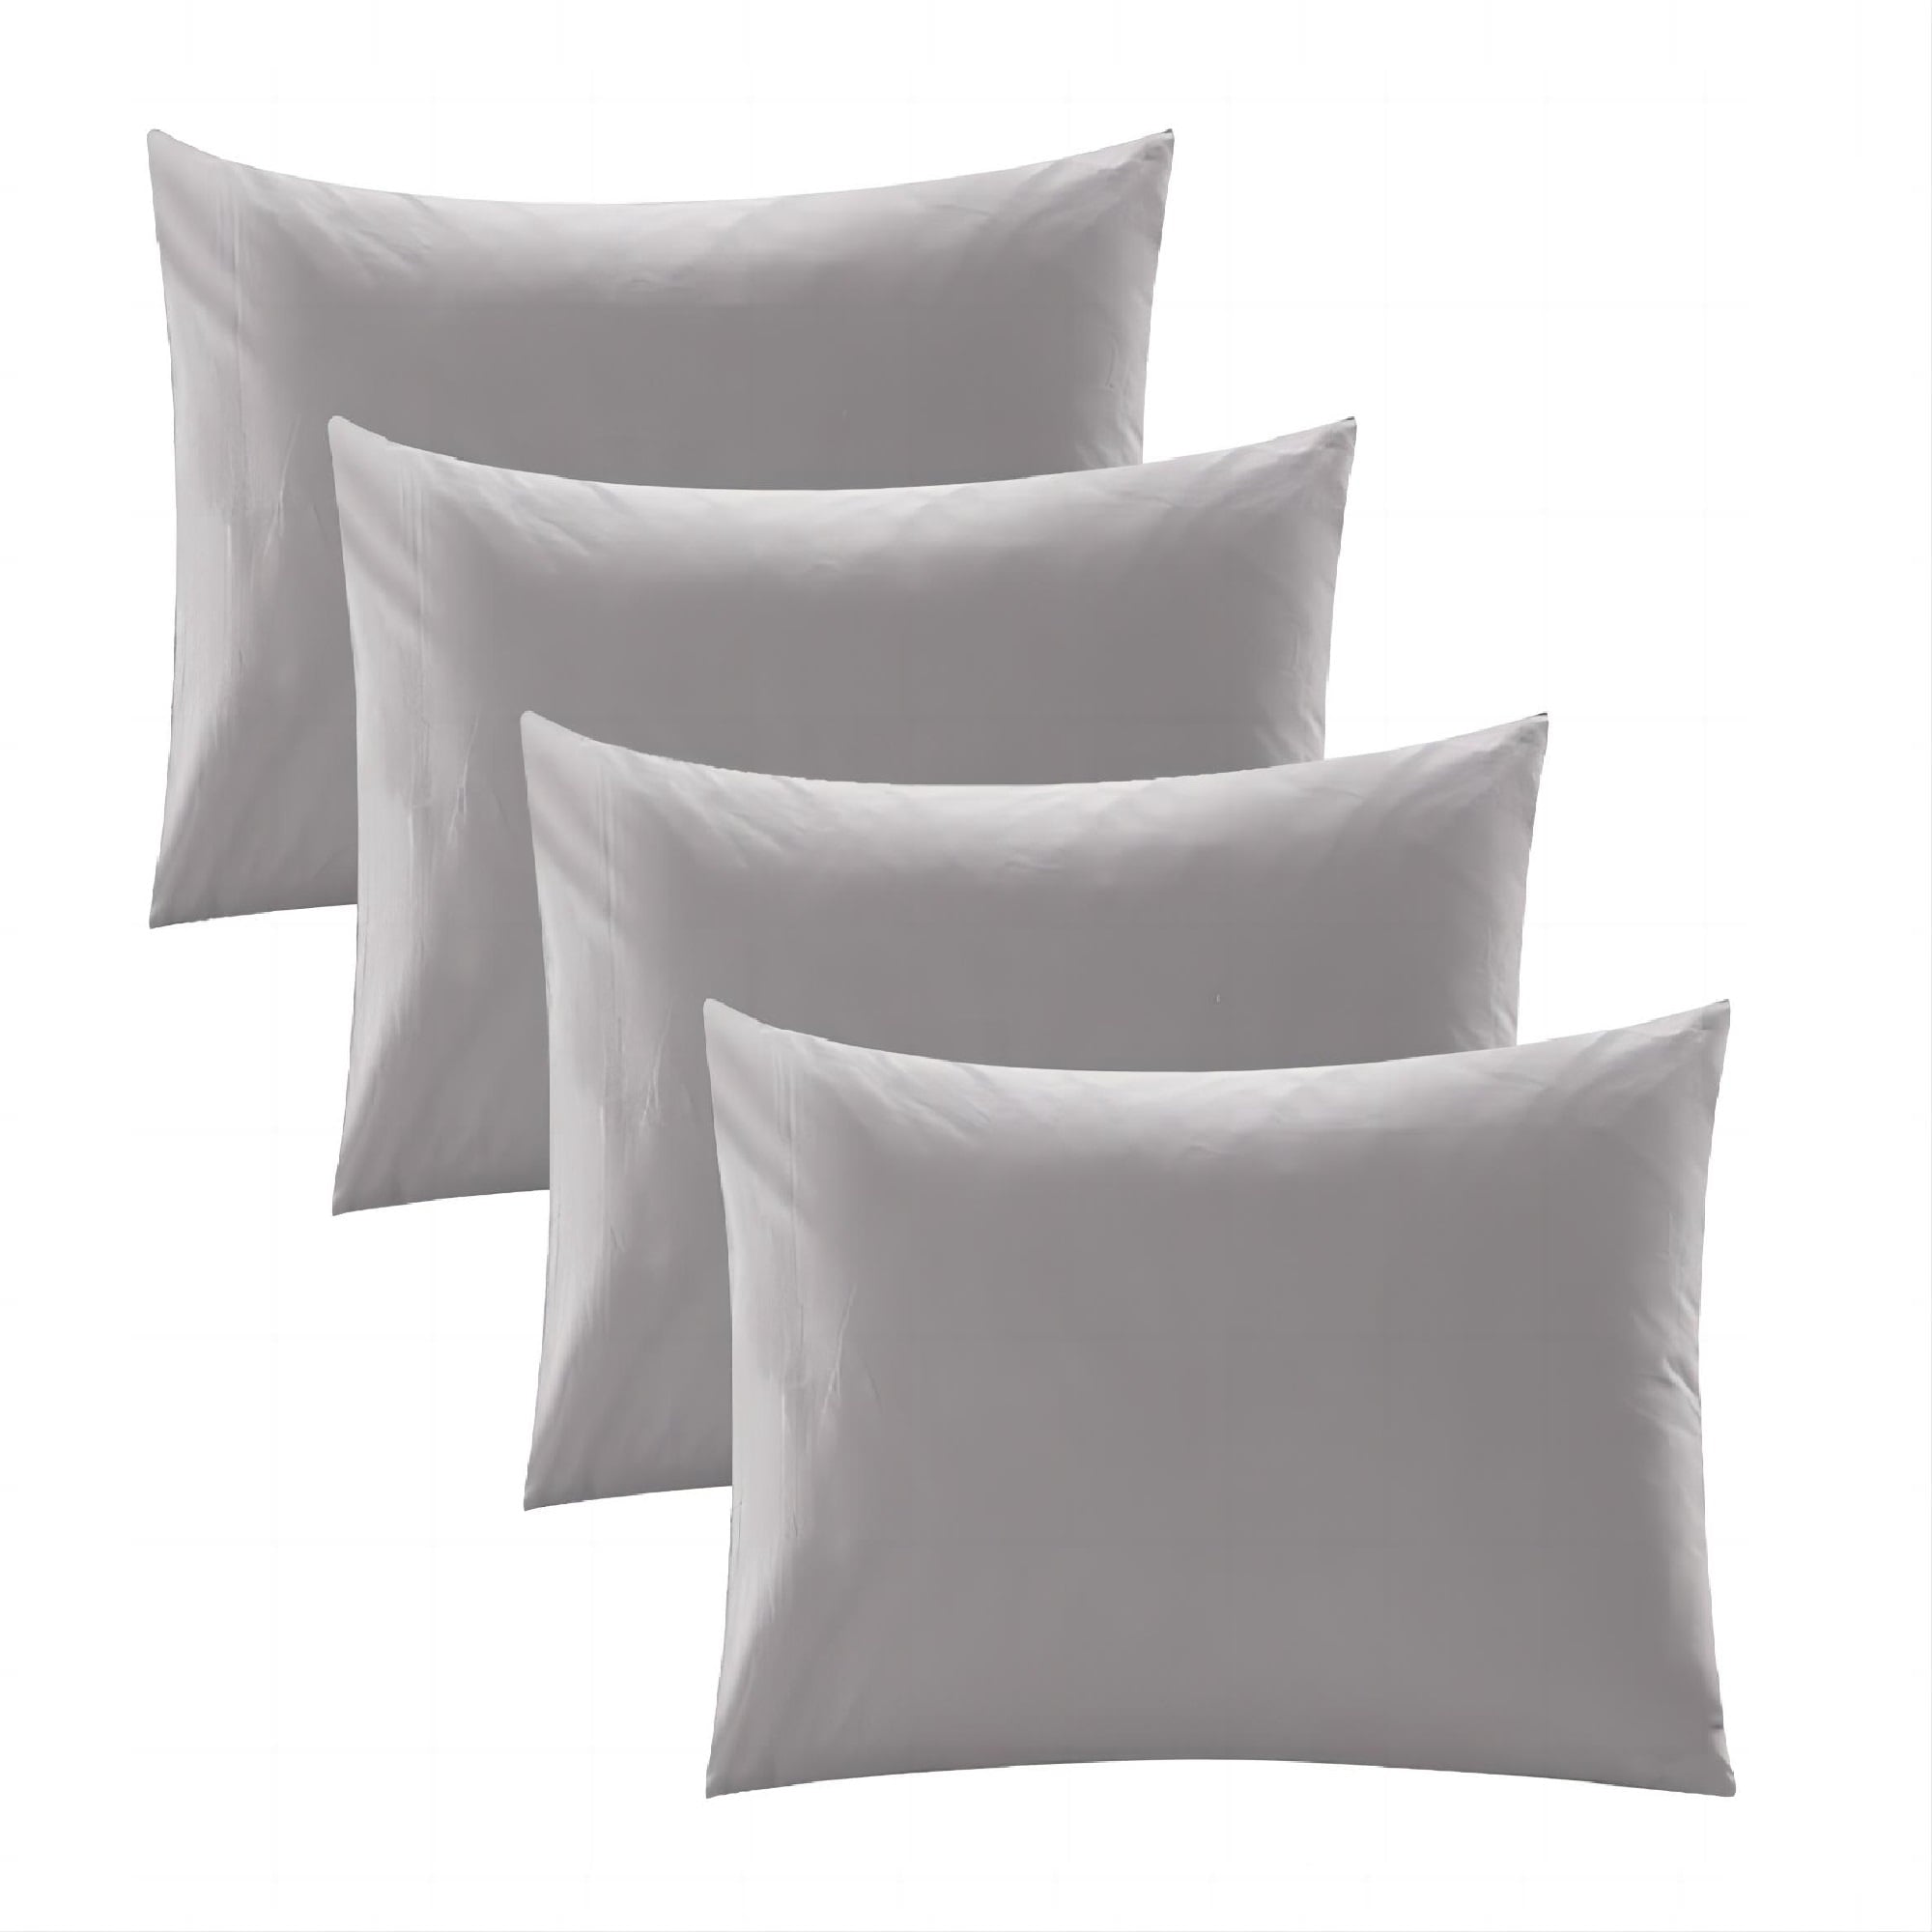 ANMINY Pillowcase set of 4 Pillow Cases-6